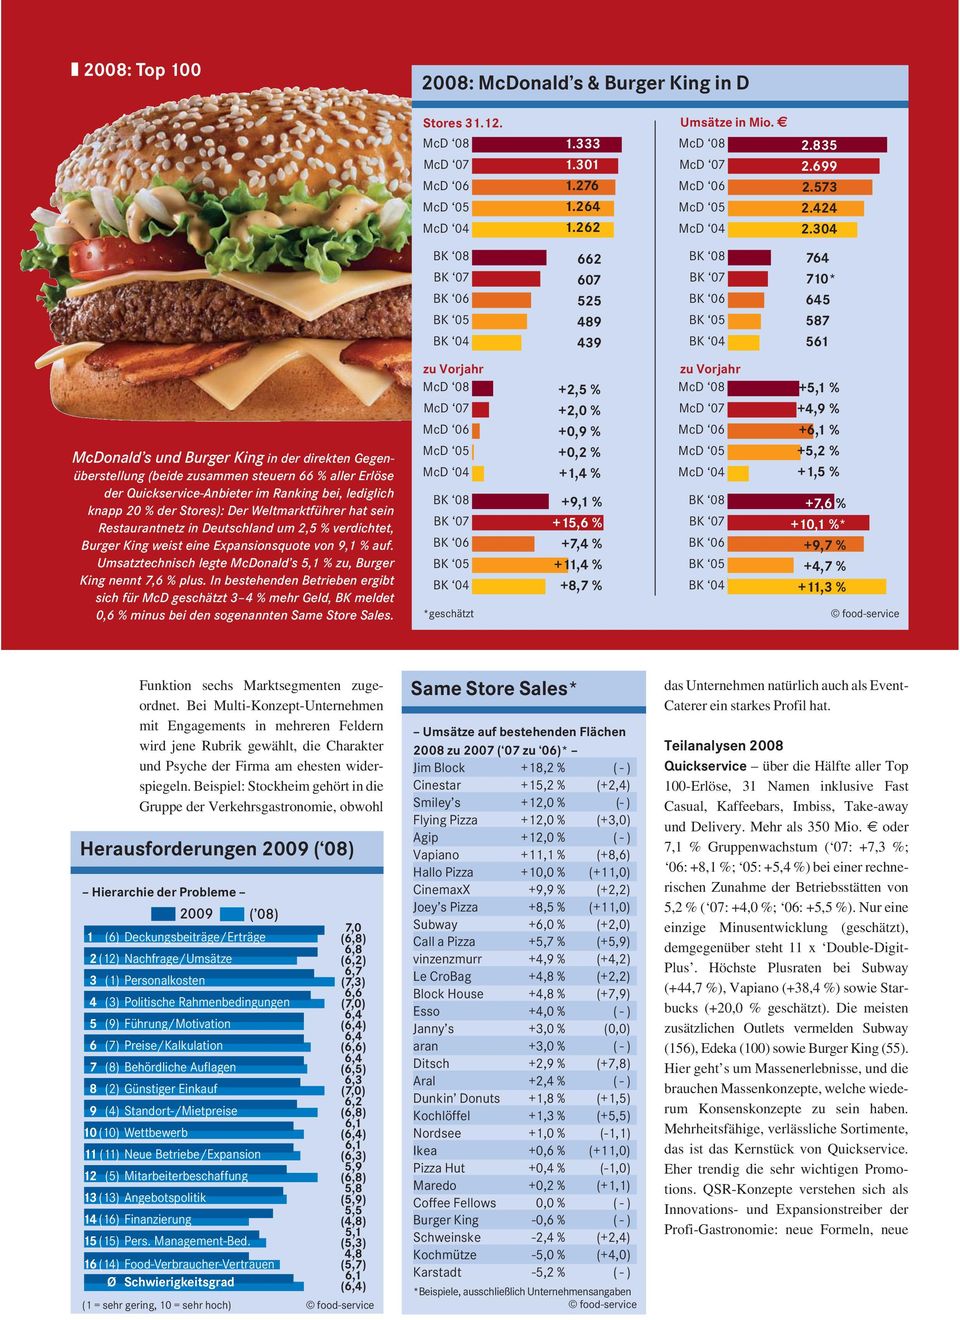 Umsatztechnisch legte McDonald s 5,1 % zu, Burger King nennt 7,6 % plus.